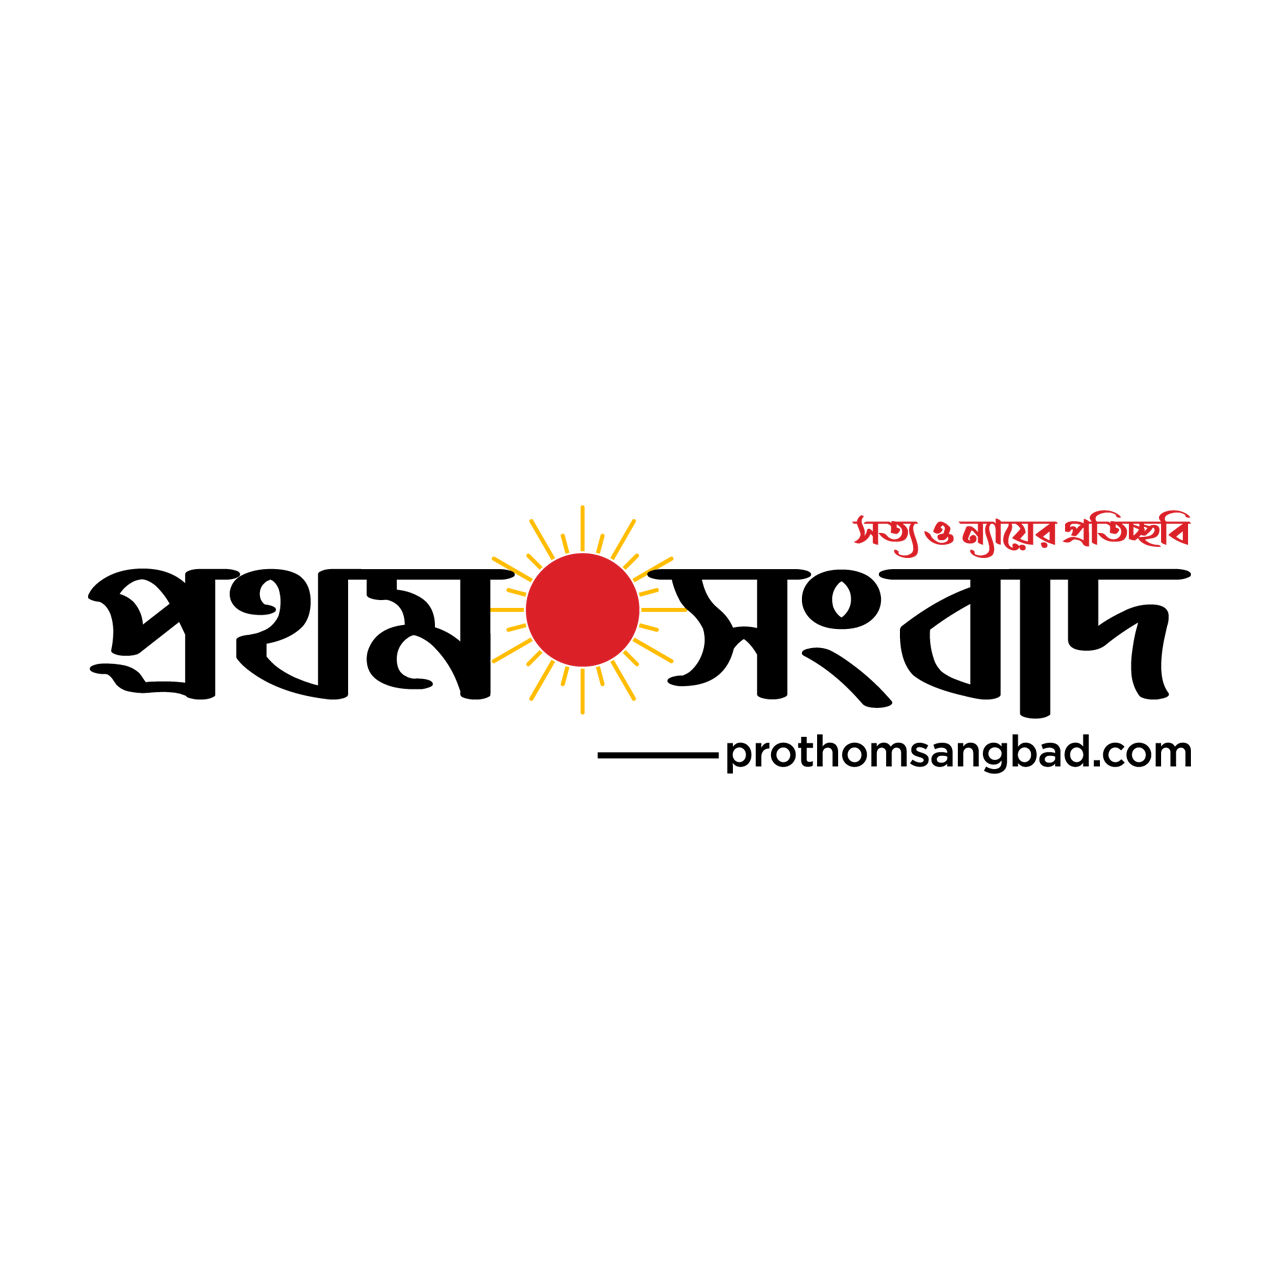 Prothom Sangbad